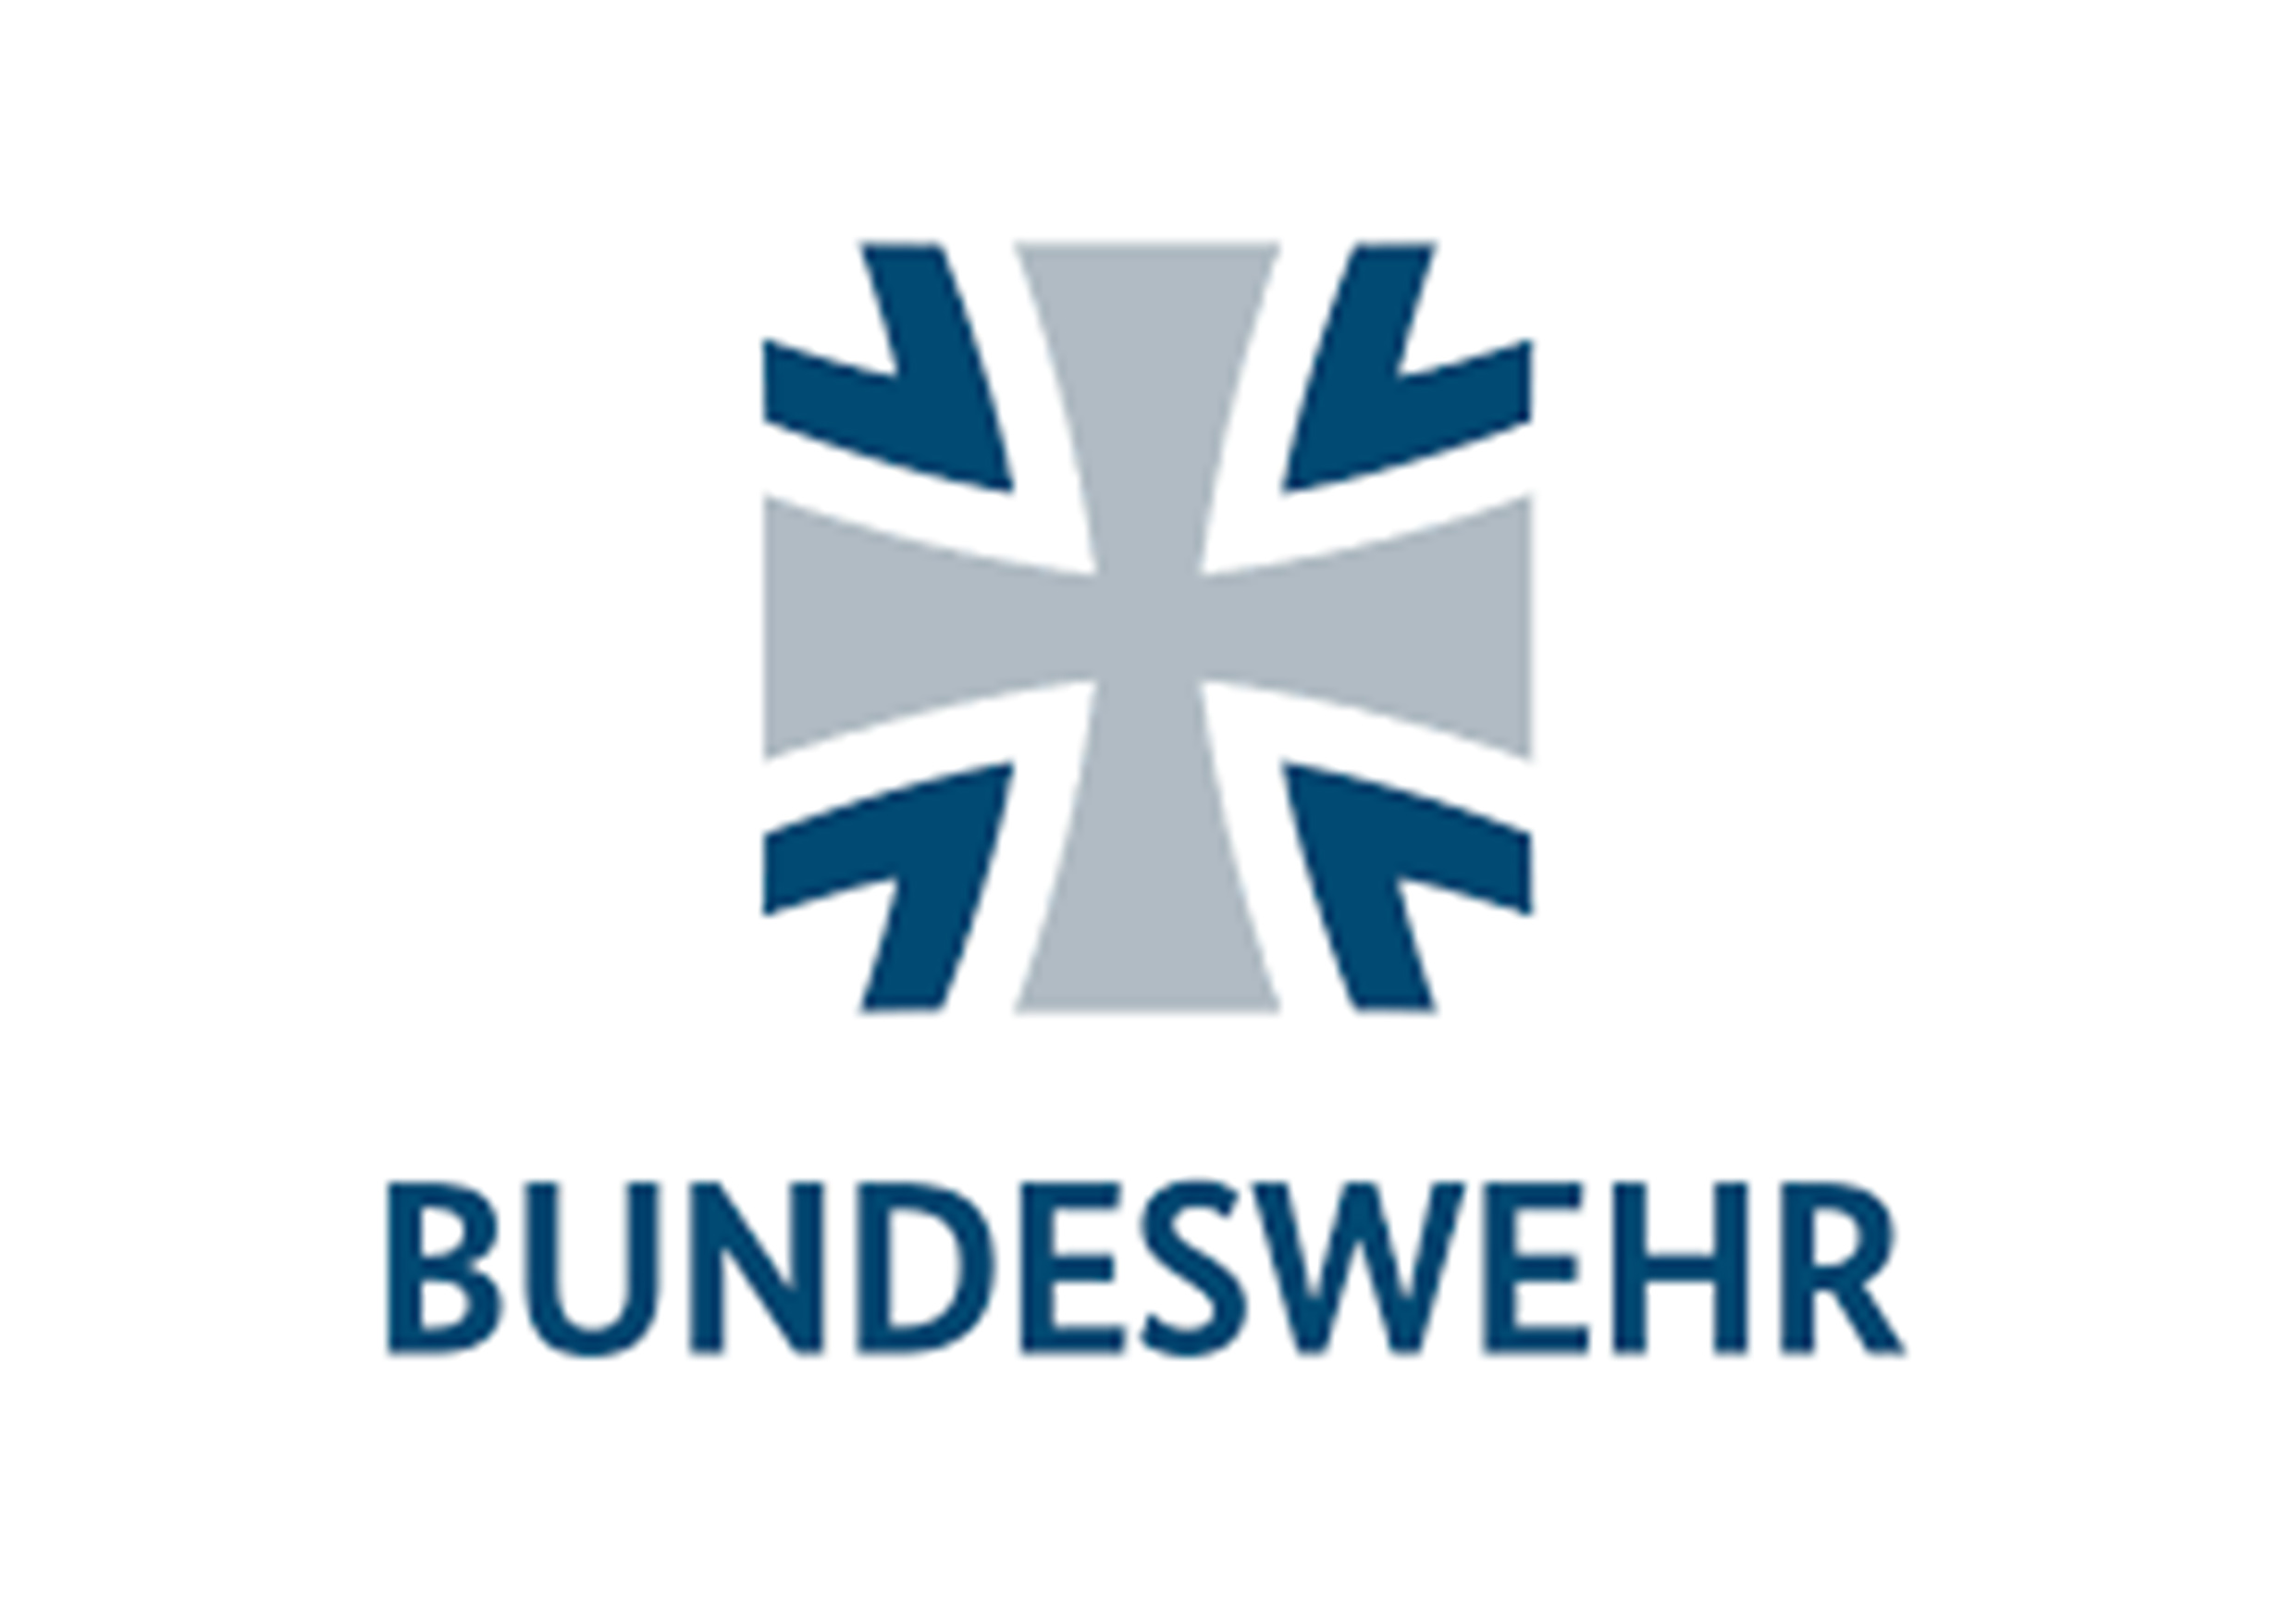 paperwings-consulting-dannyherzogbraune-logo-bundeswehr-referenzen-webseite Kopie